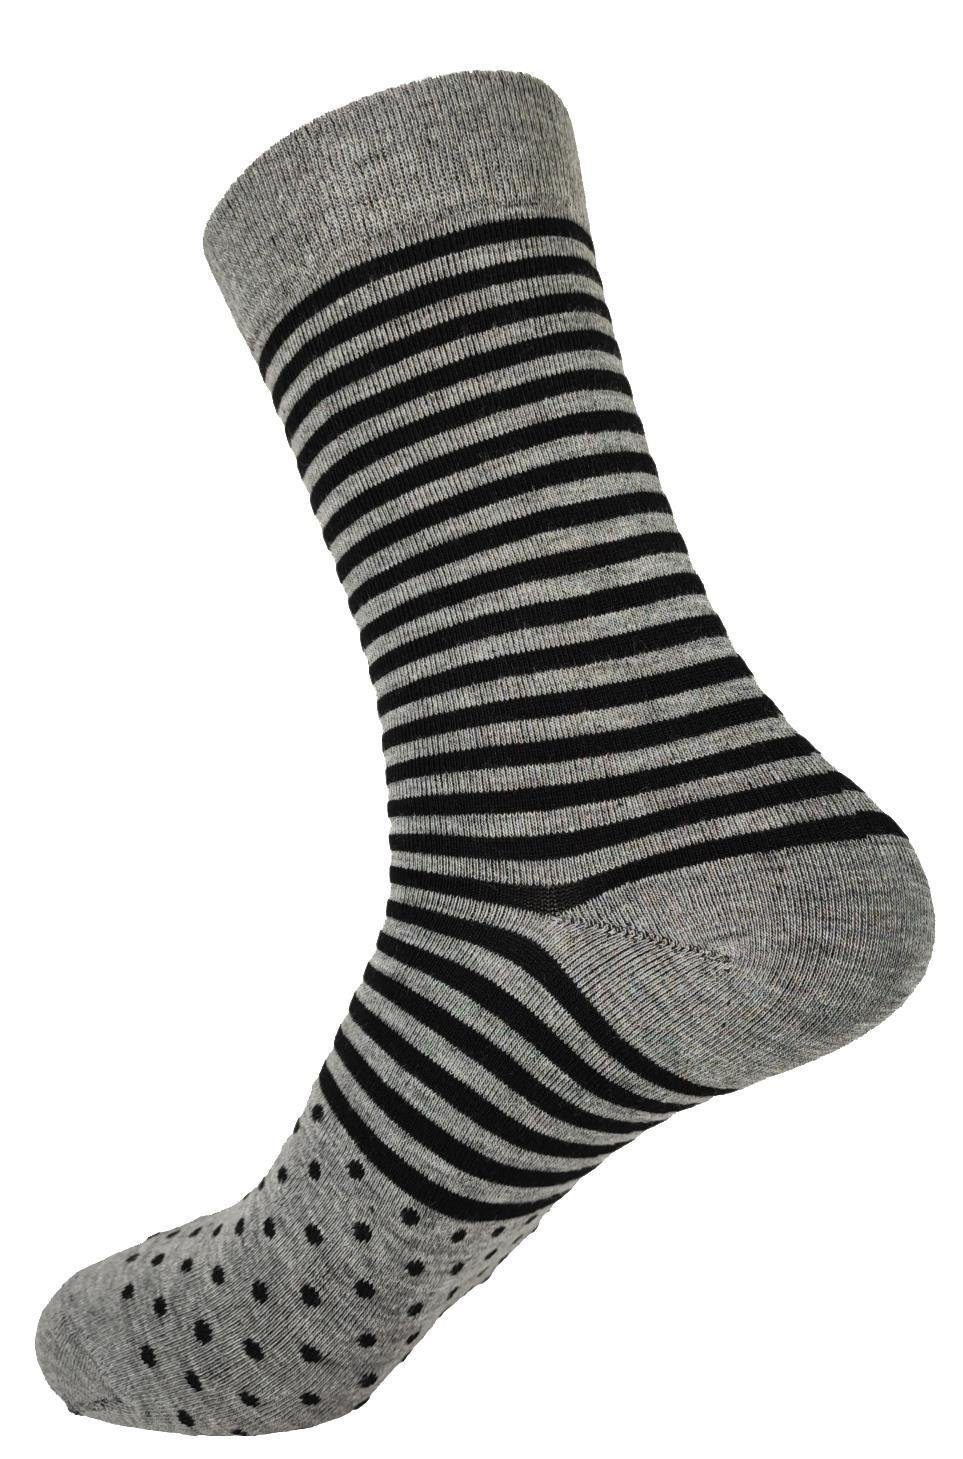 Mix11 Socken Paar, 39-42 Baumwolle; Freizeitsocken Damen mit 12 Paar 35-38 Muster 12 EloModa (12-Paar)